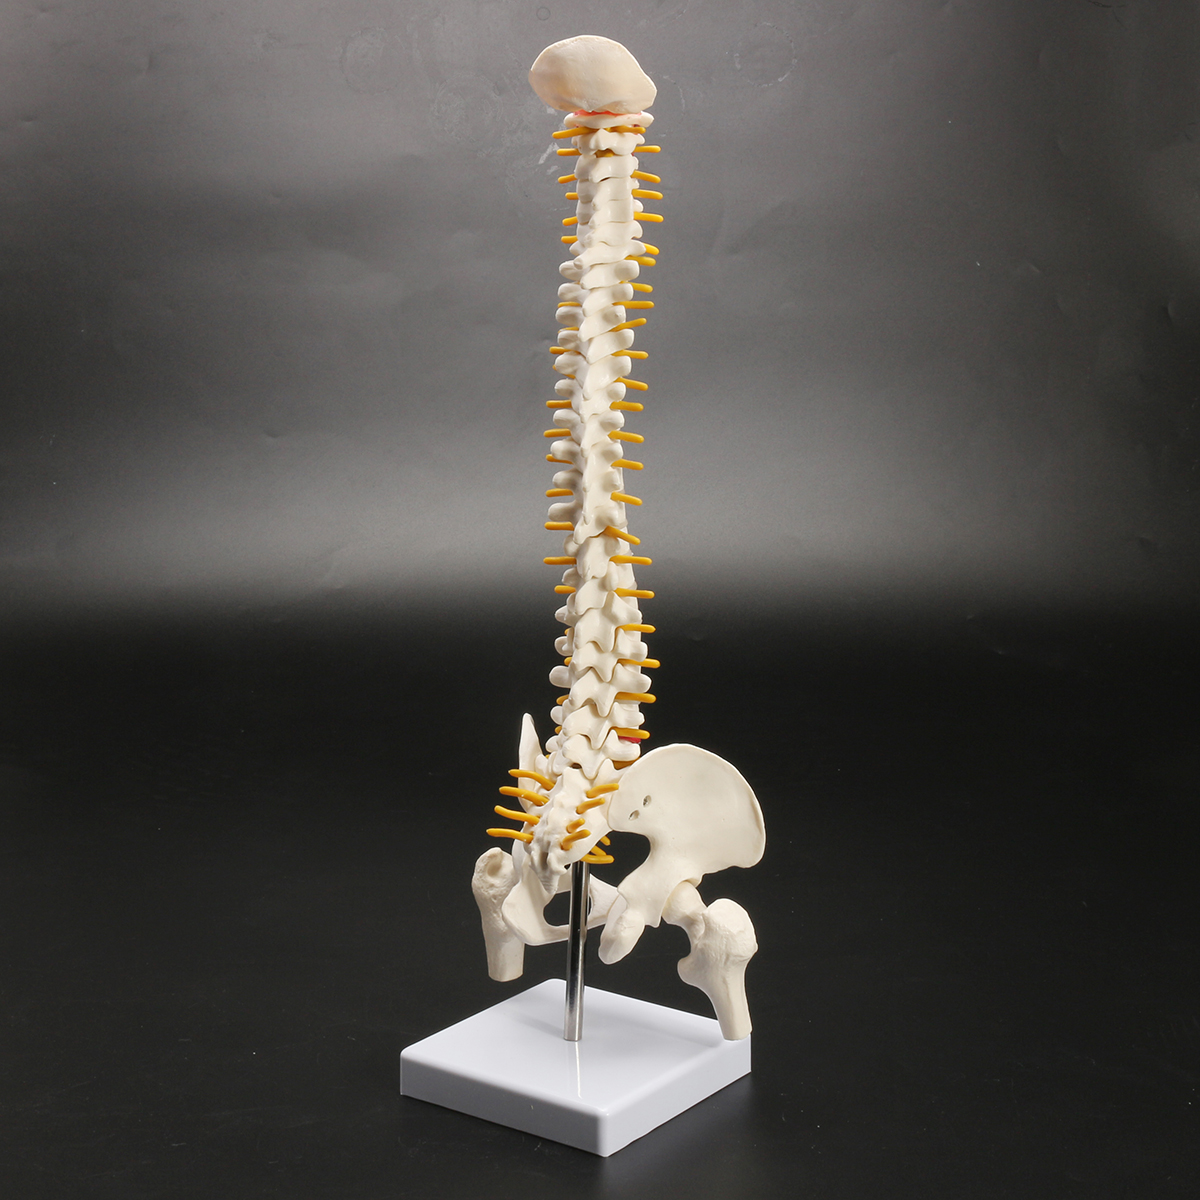 45cm-177quot-Spine-Medical-Model-With-Pelvis-Femur-Heads-12-Life-Lab-Equipment-1620821-6